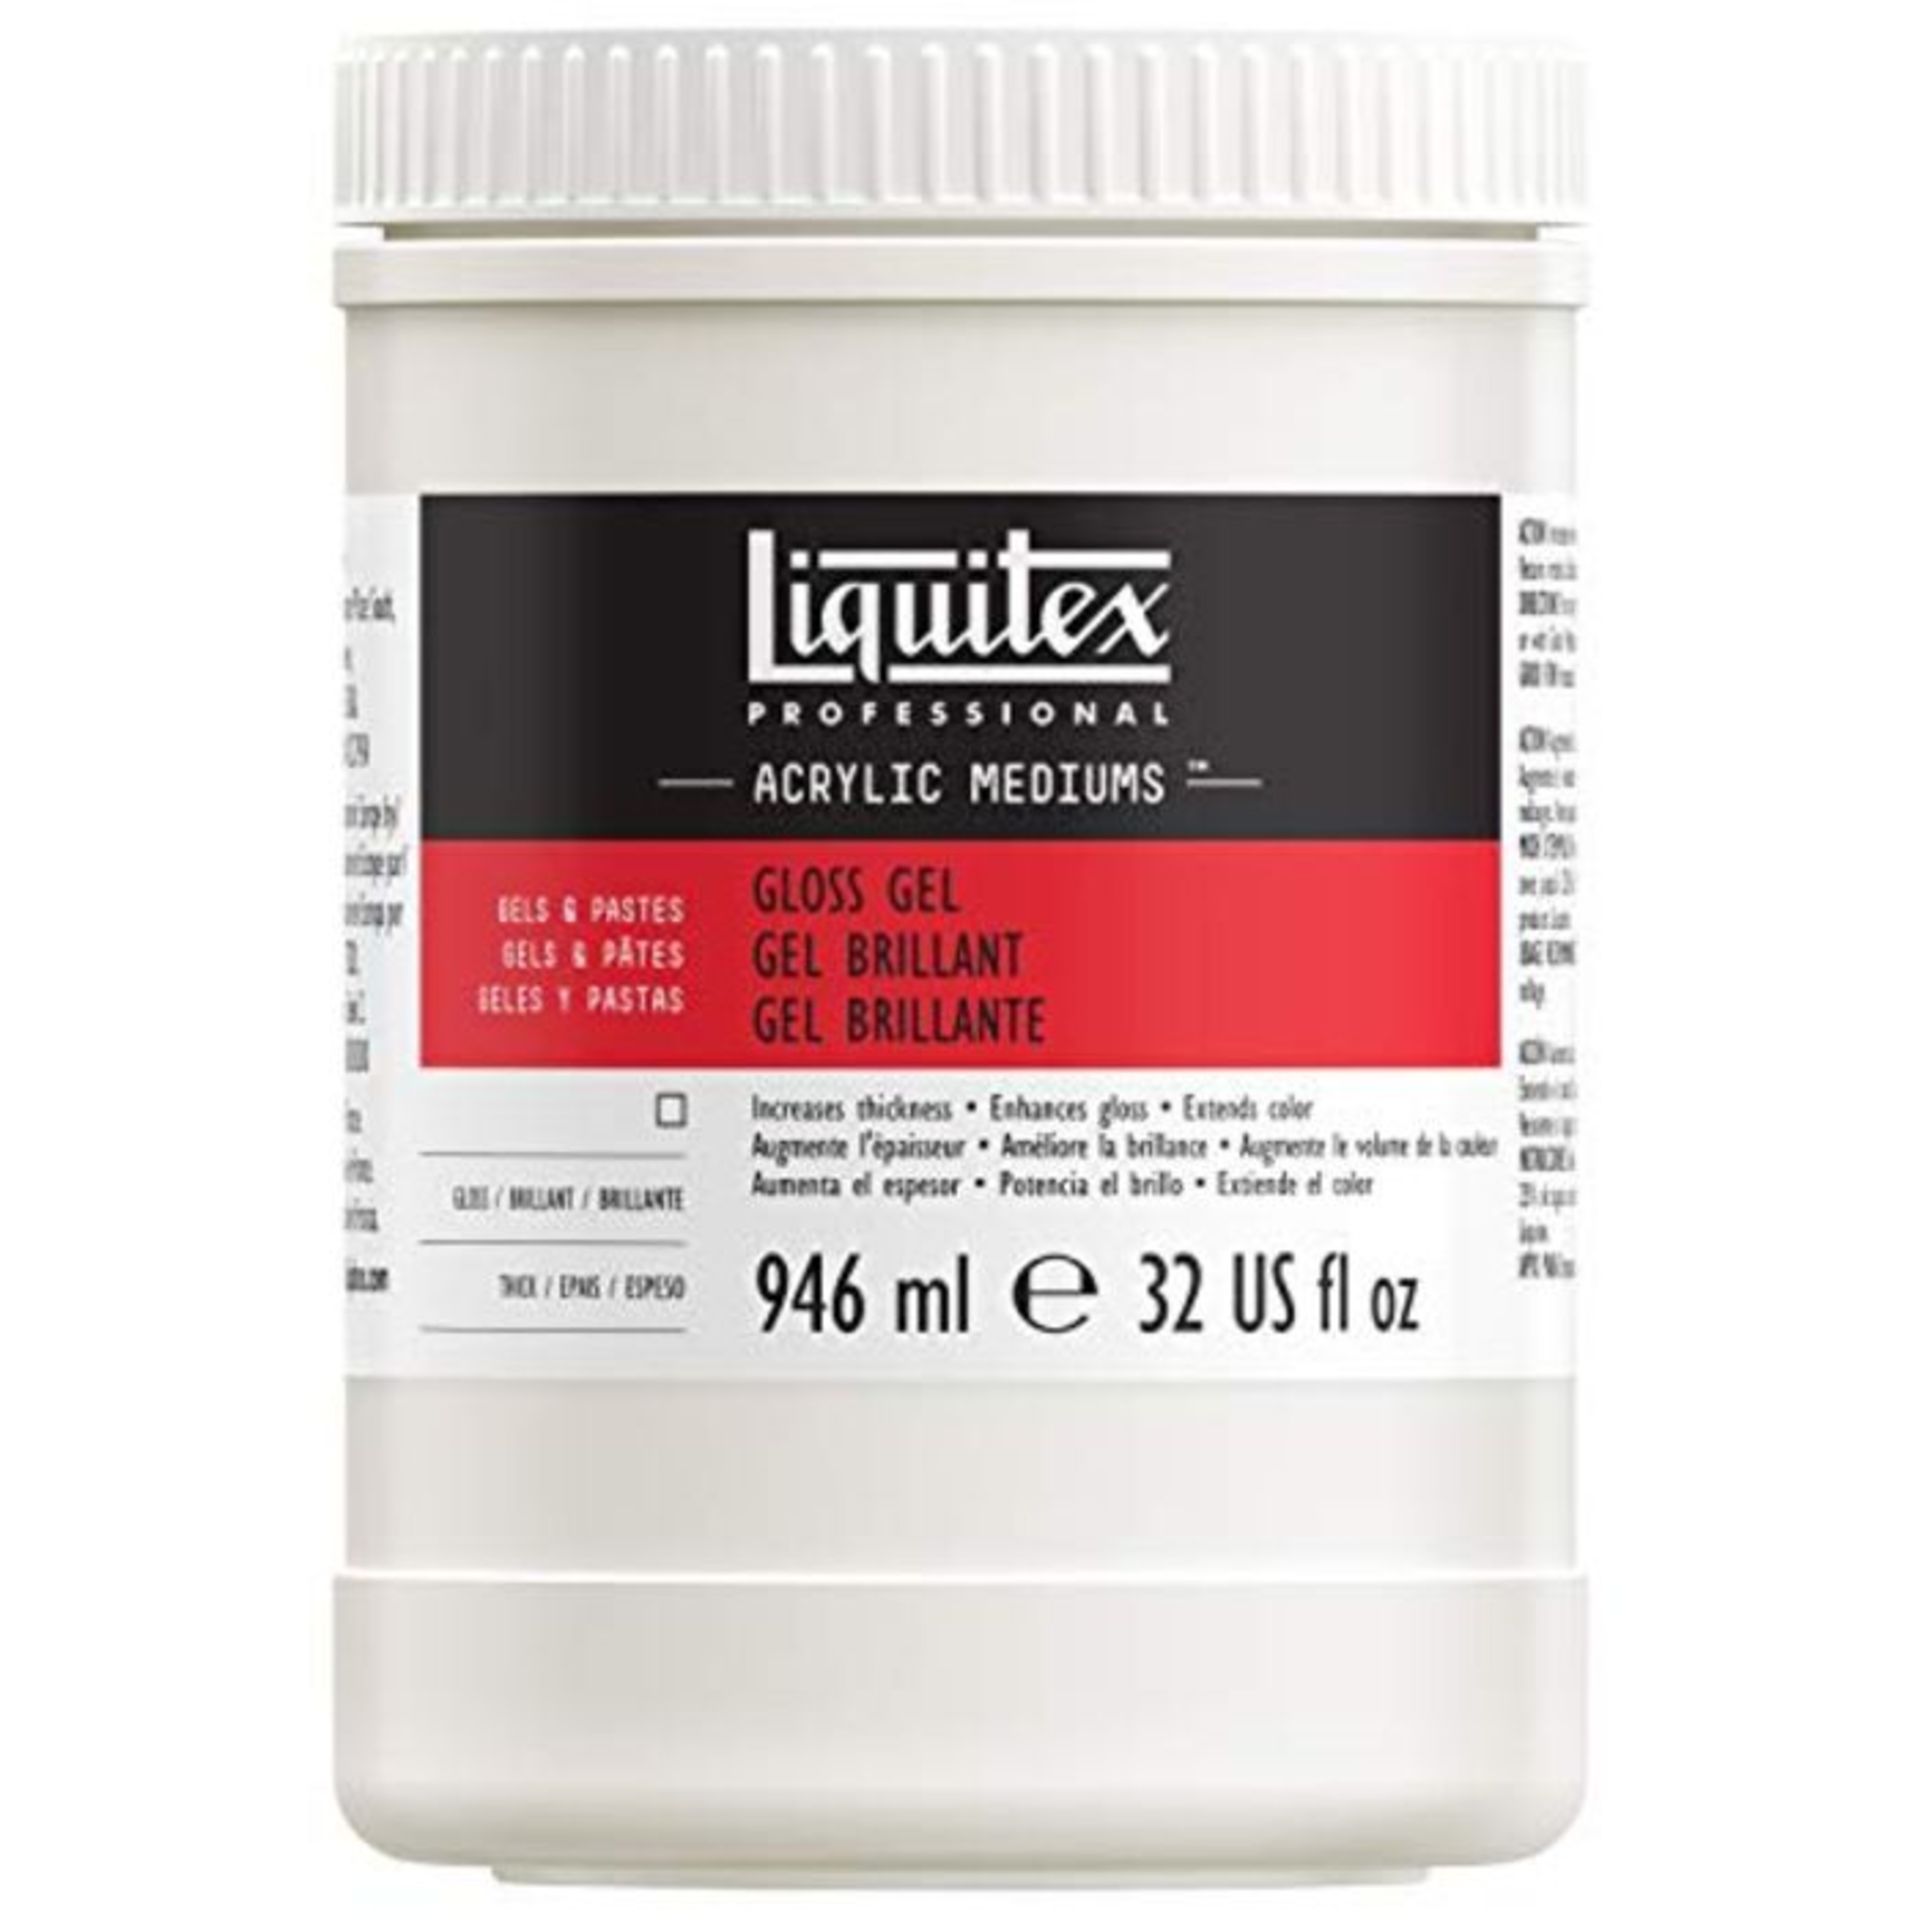 Liquitex Professional Gloss Gel Medium, 946 ml